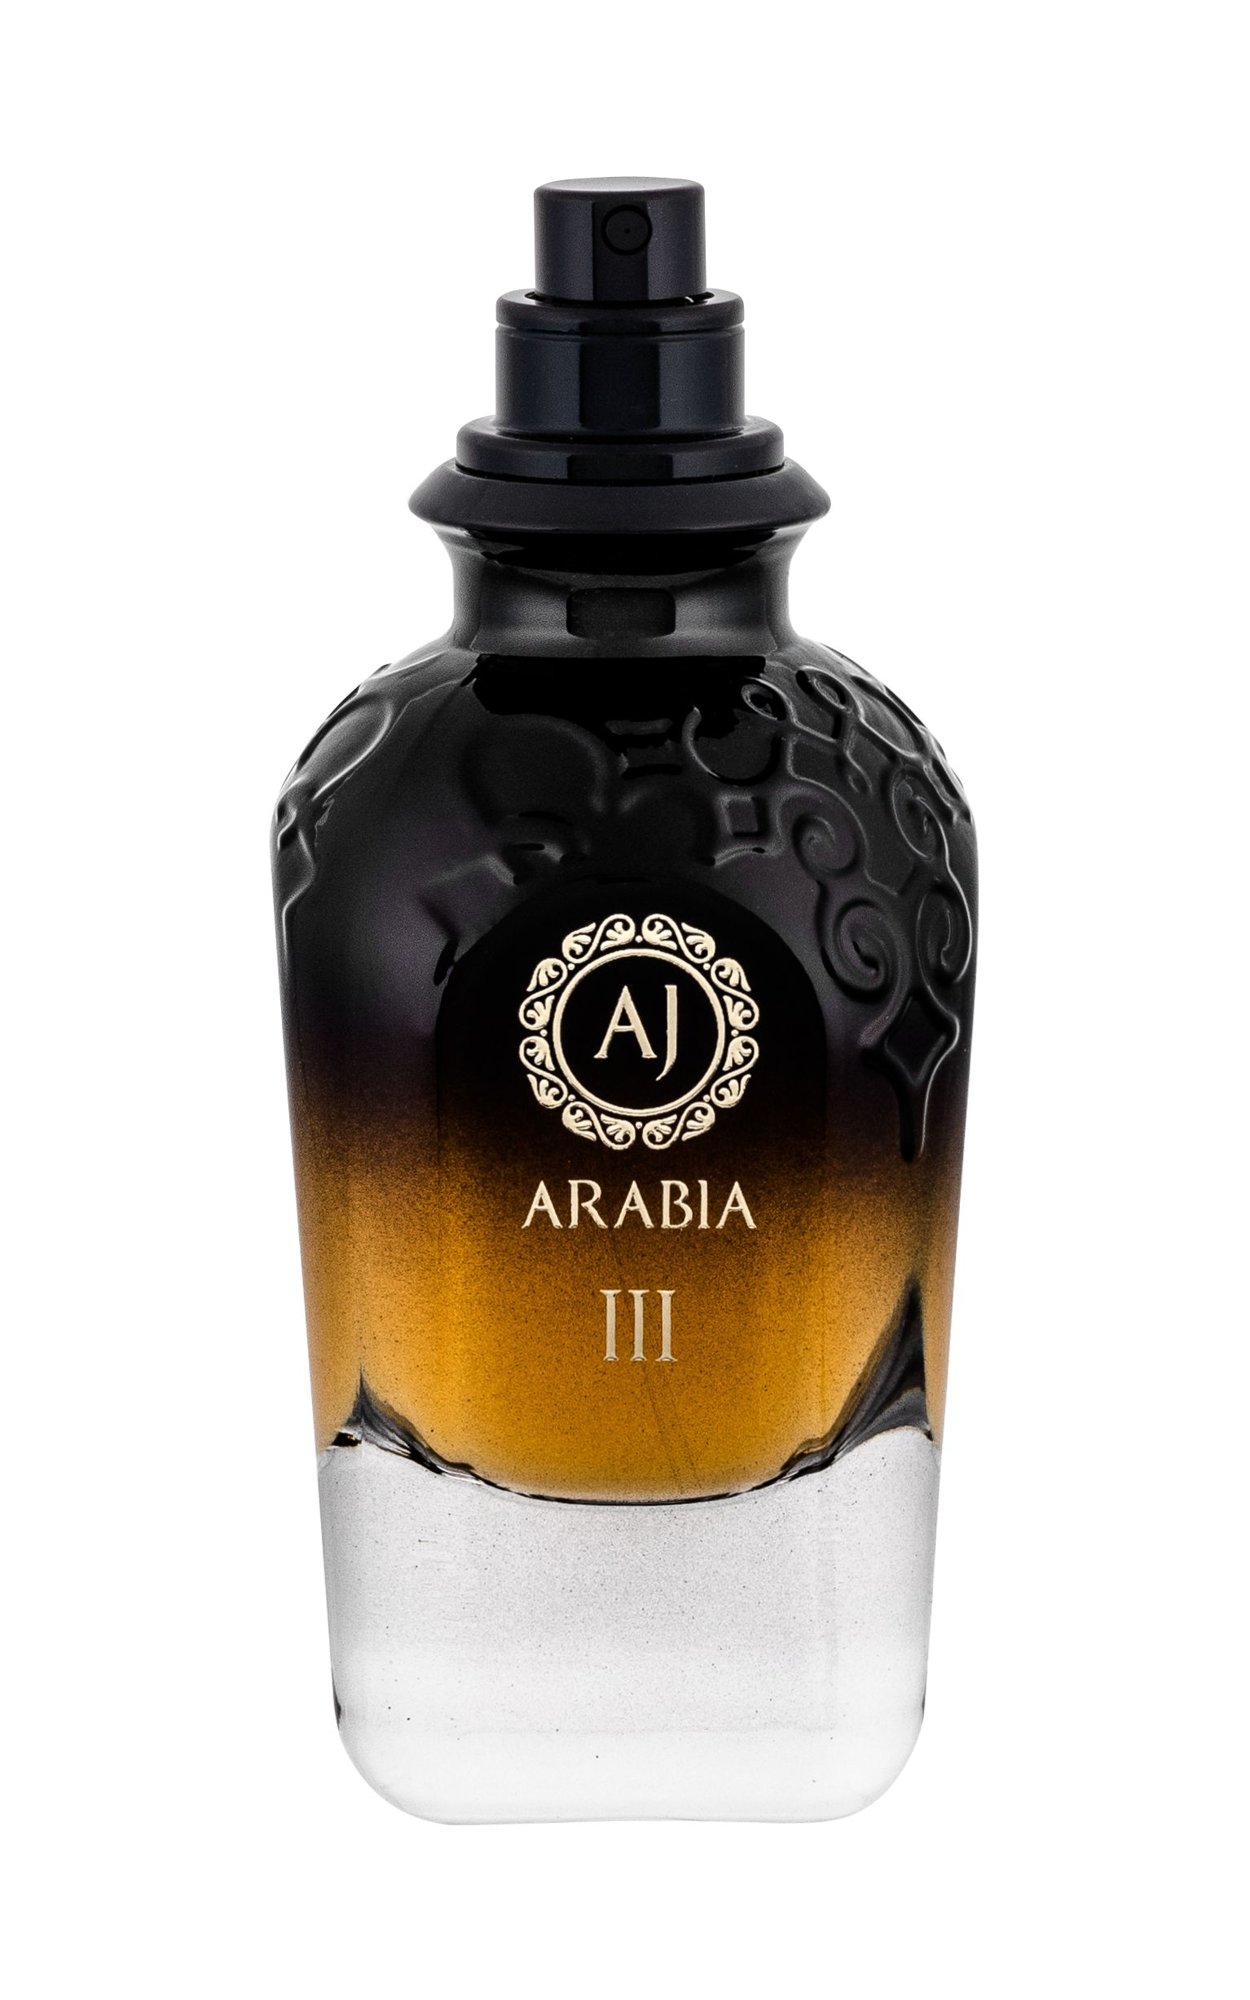 Widian Aj Arabia Black Collection III 50ml NIŠINIAI Kvepalai Unisex Parfum Testeris